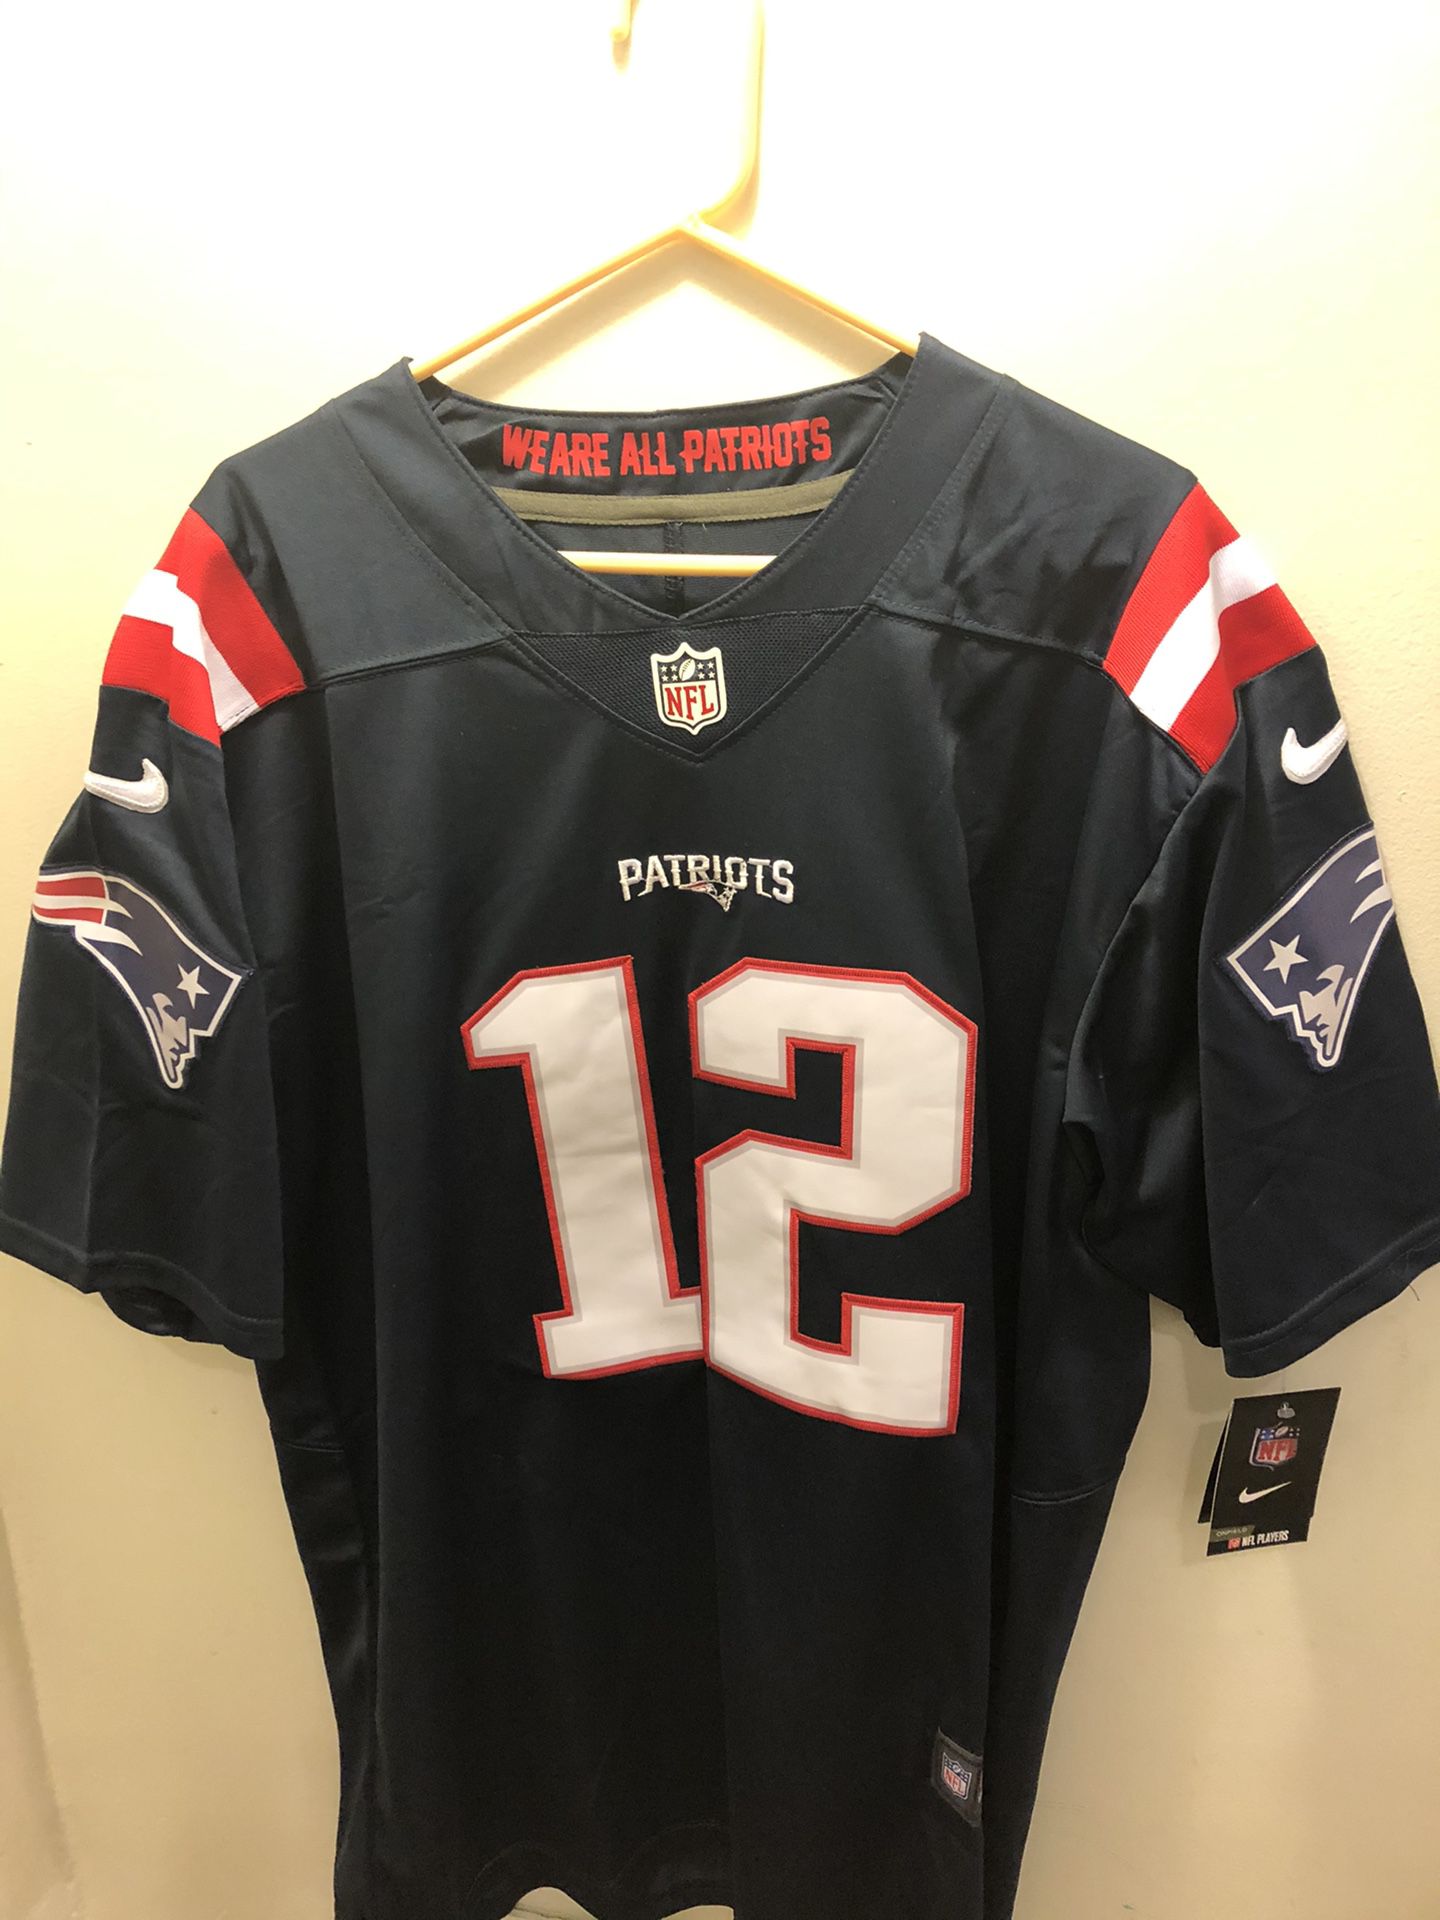 New England Patriots/Tom Brady jersey